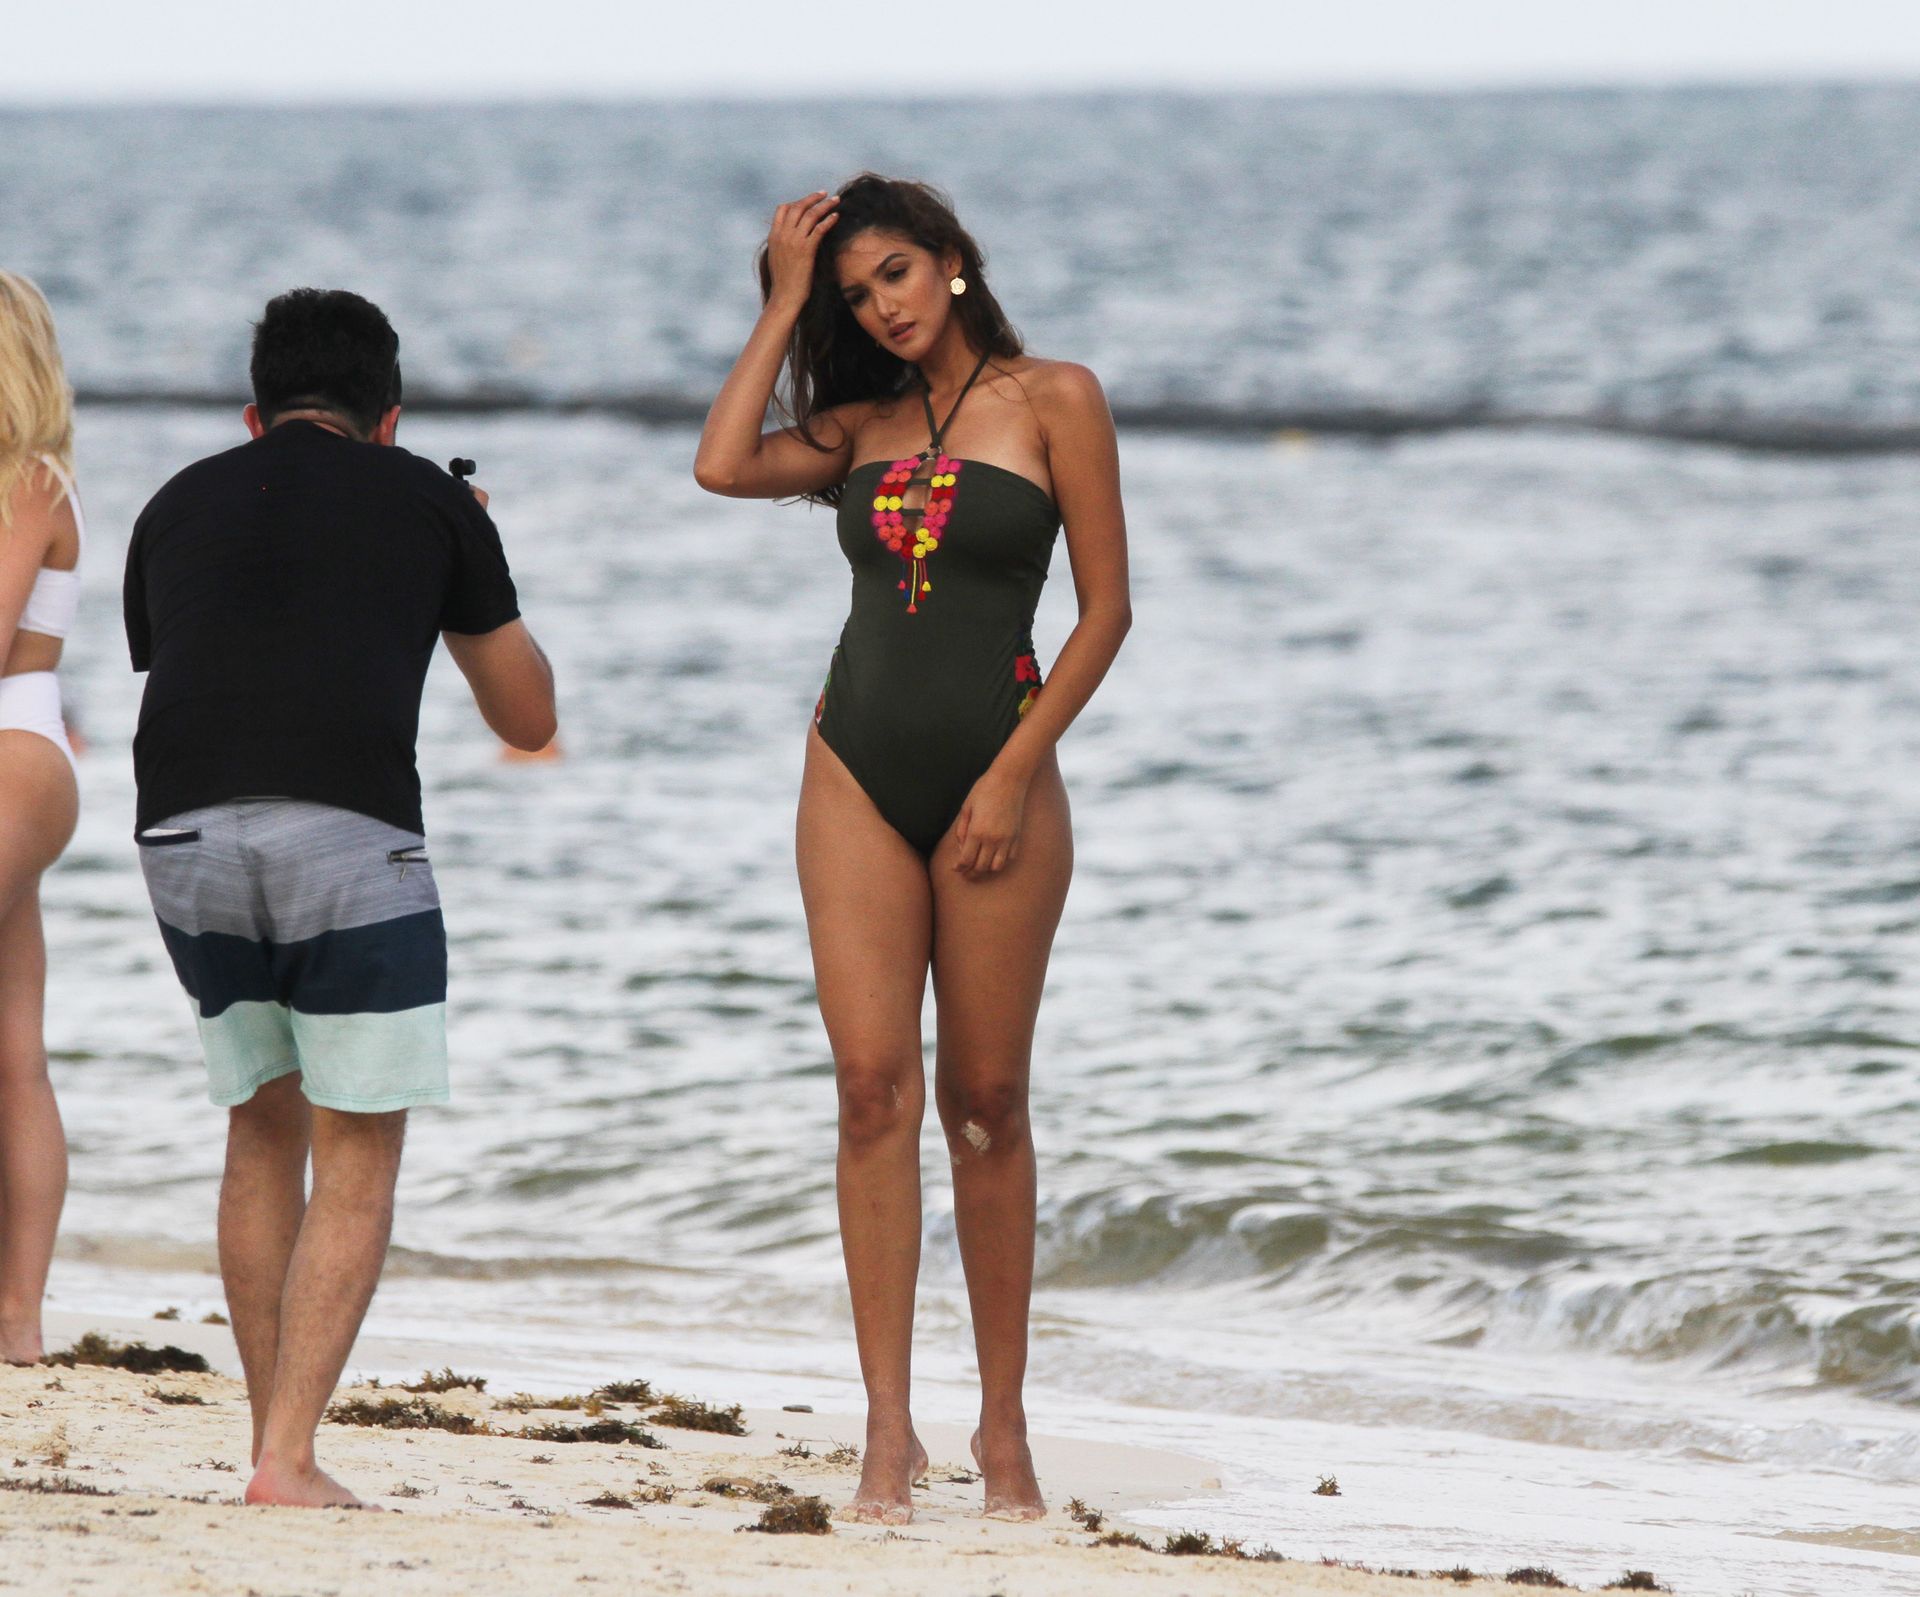 Universo 2014, TV presenter Kimberly Castillo displays her toned figure whi...